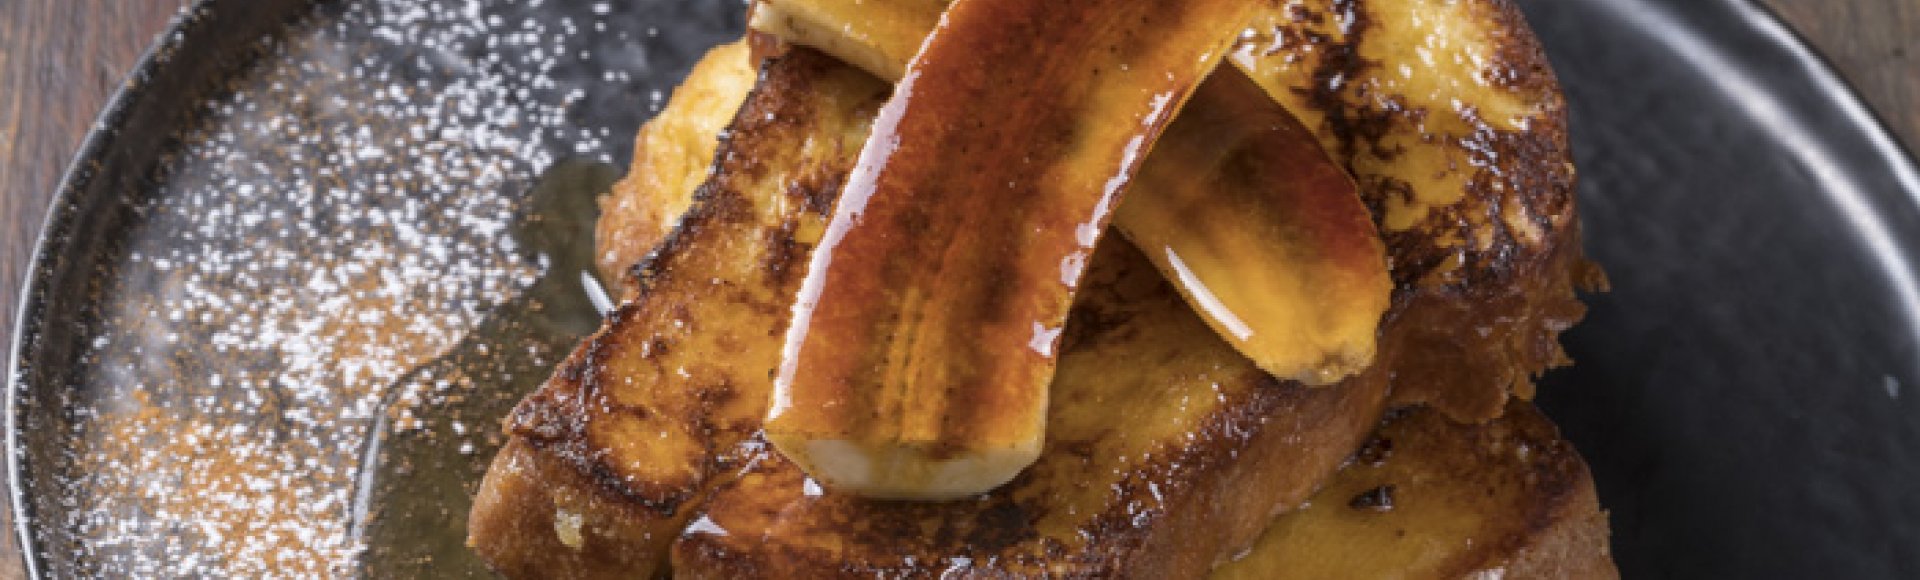 Aυγόφετες «french toast» με καραμελωμένες μπανάνες